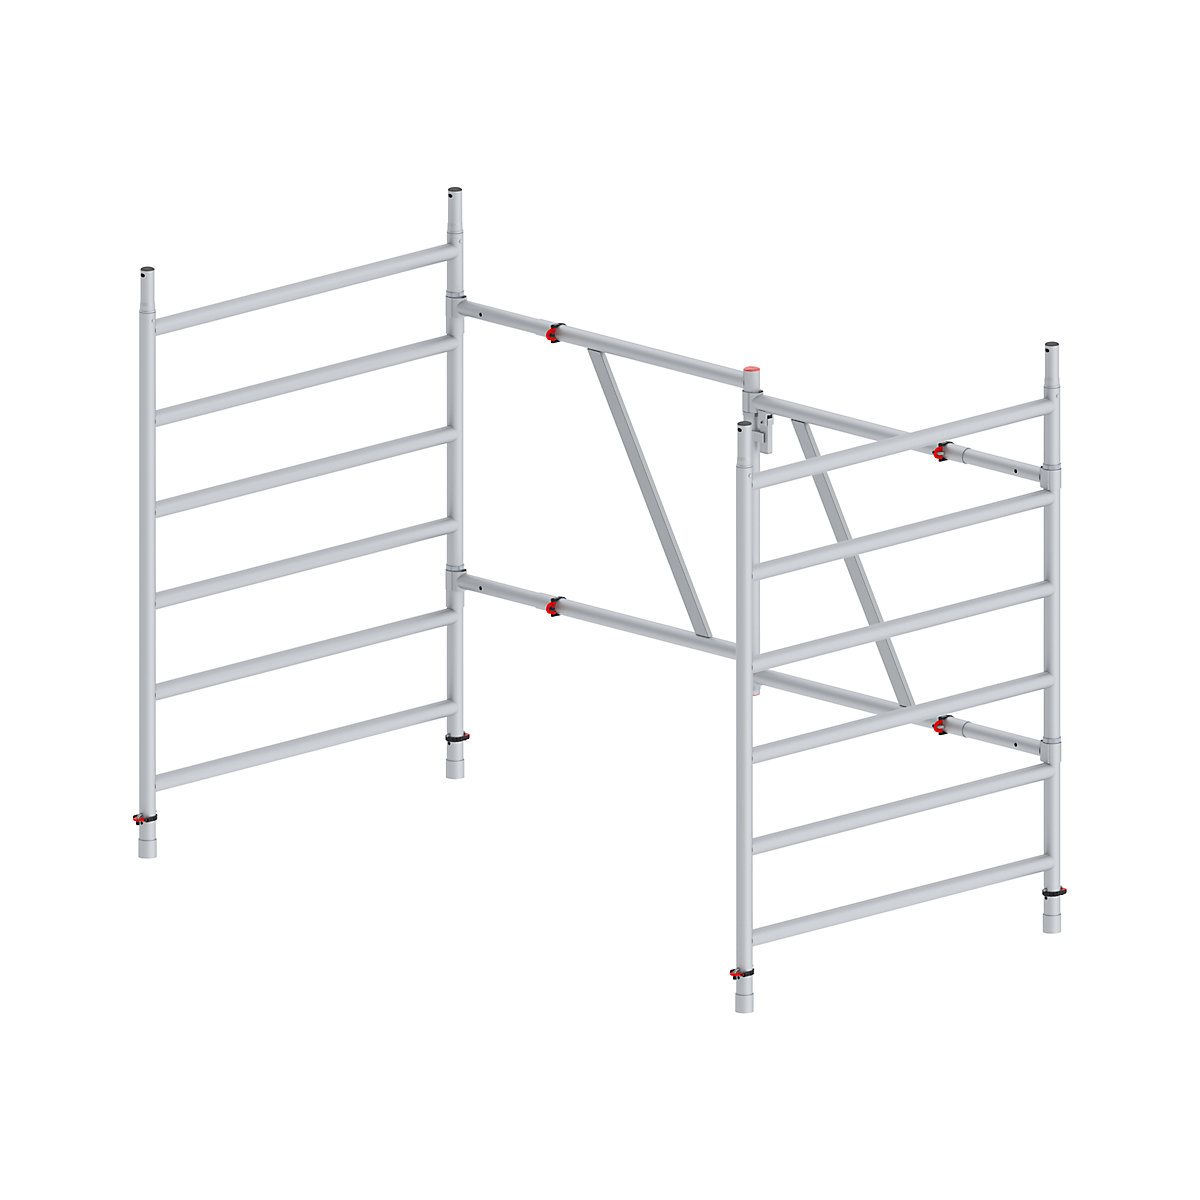 Folding scaffold frame – Altrex